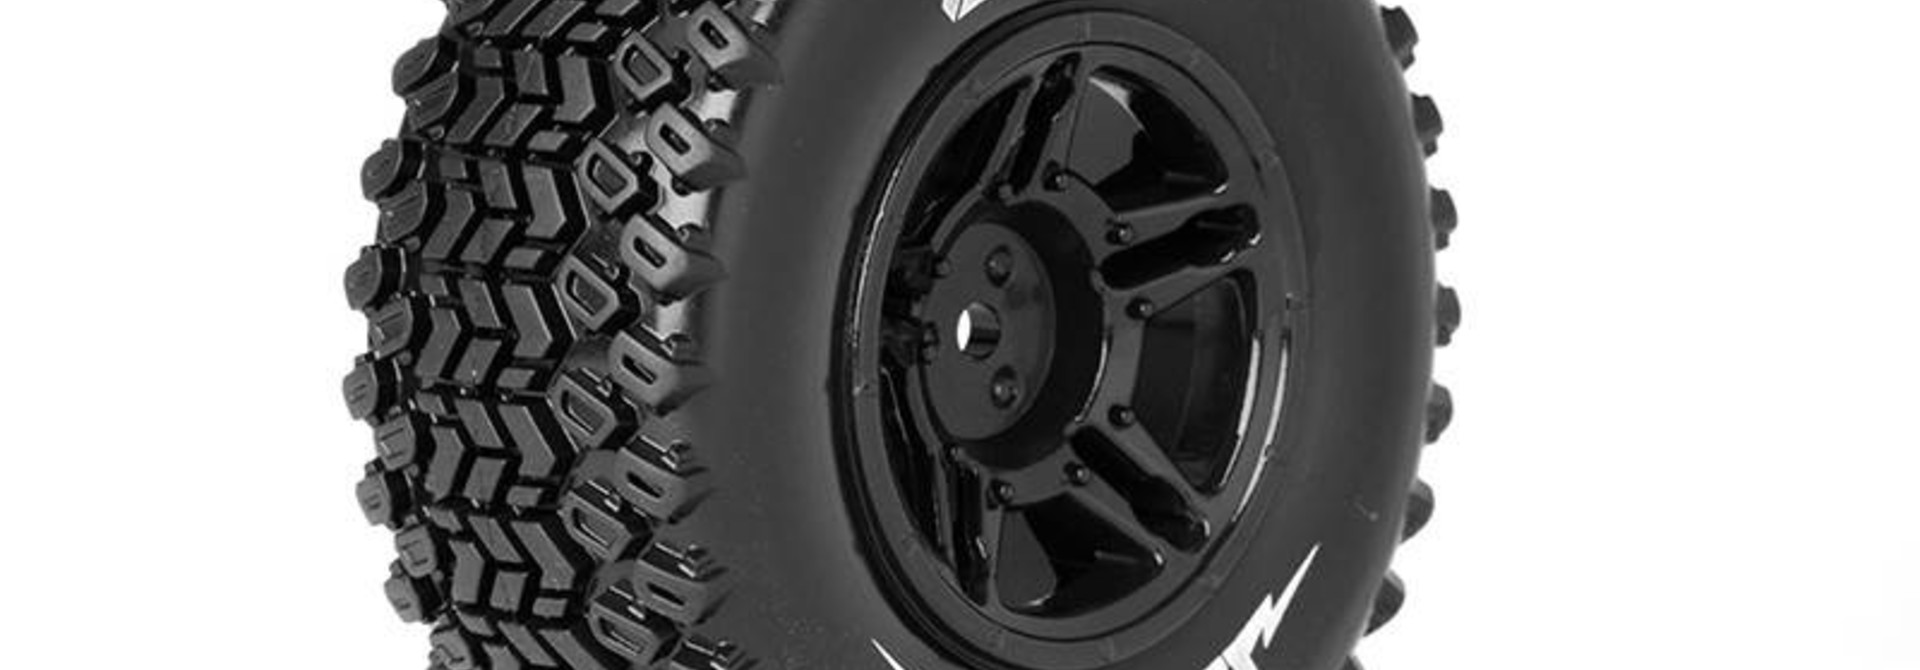 Louise RC - SC-HUMMER - 1-10 Short Course Tire Set - Mounted - Soft - Black Rims - Hex 12mm - SLASH 2WD - Front - L-T3224SBTF